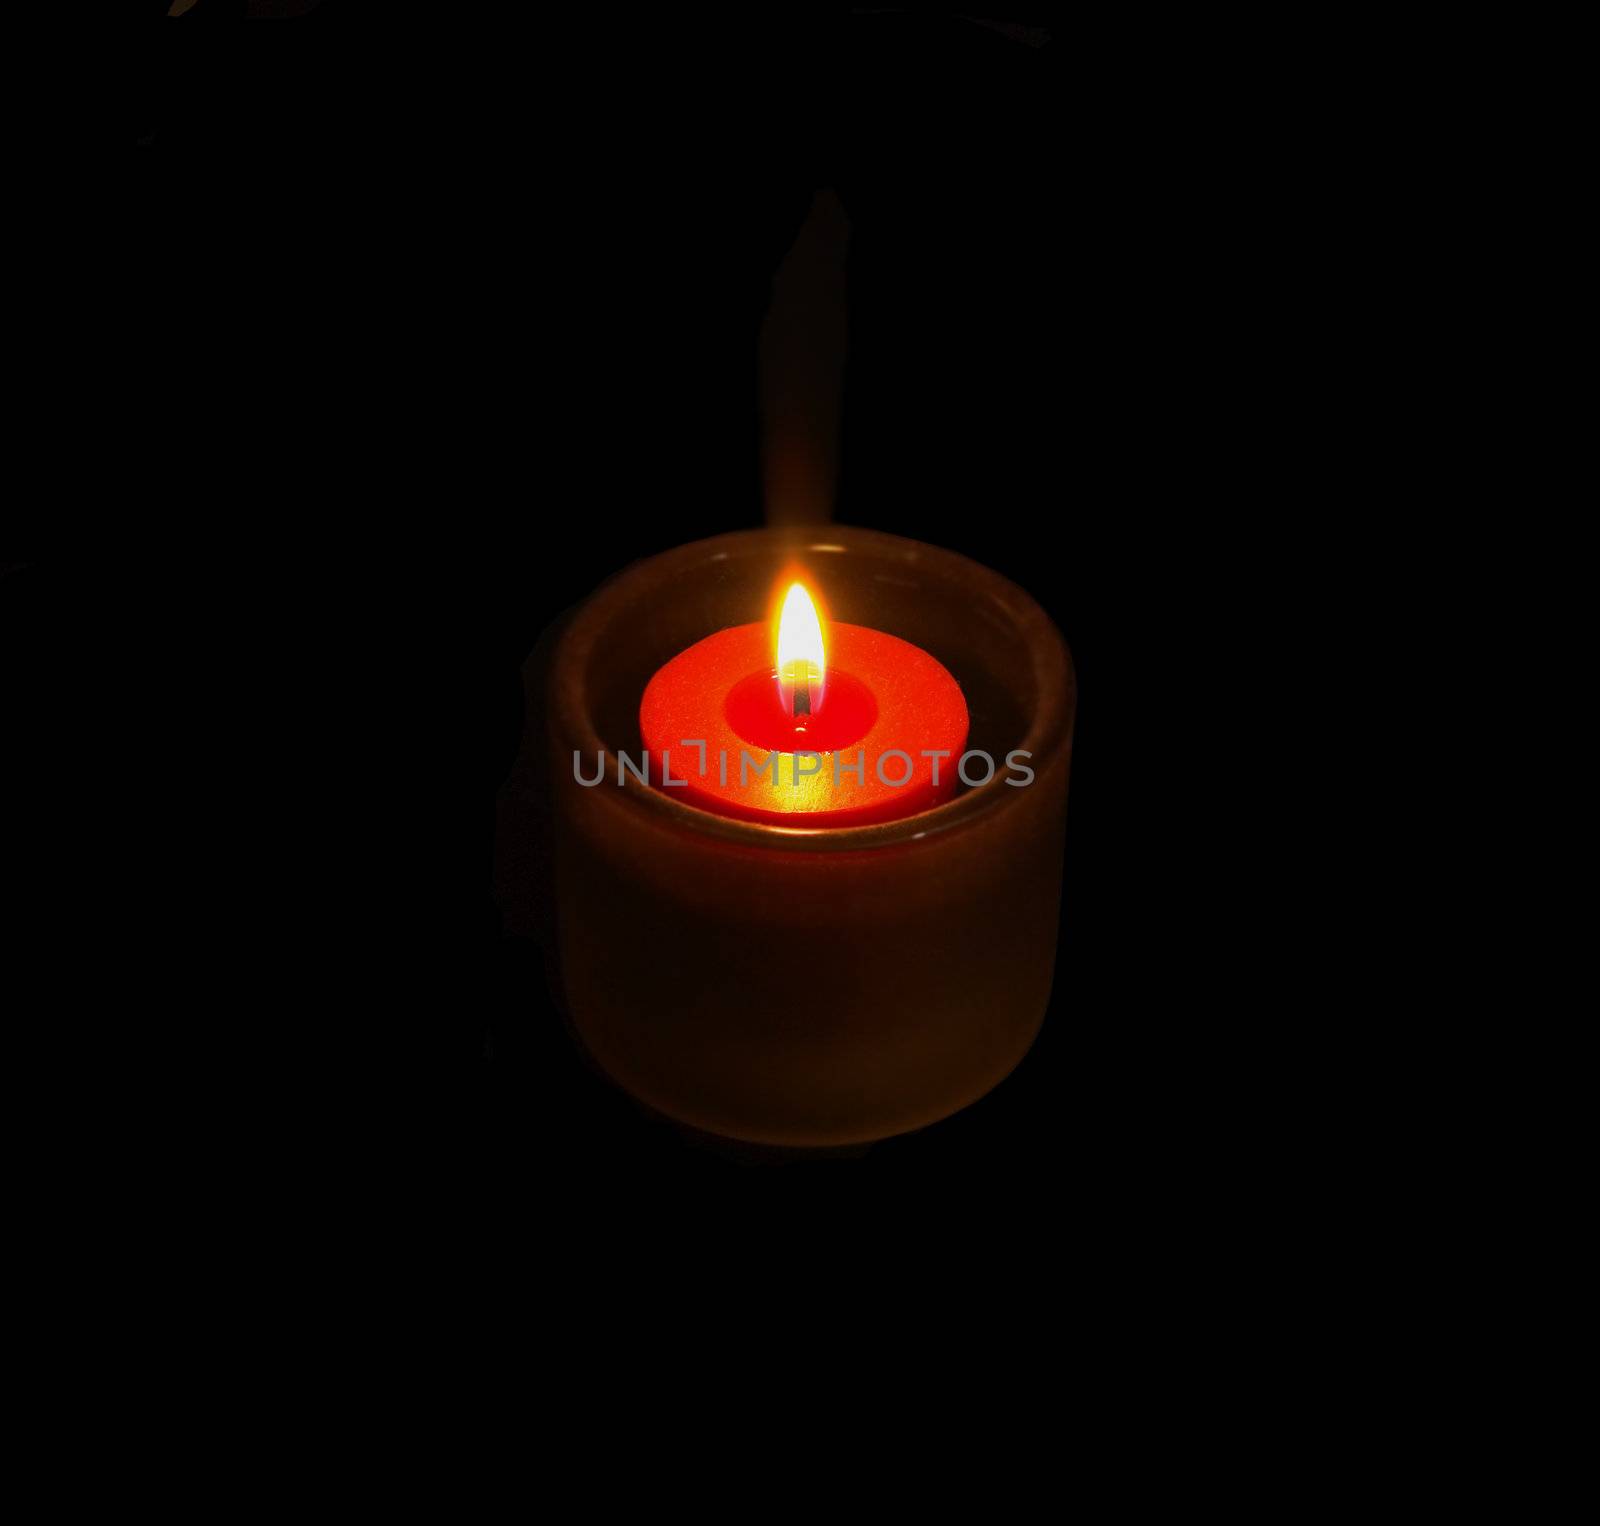 candlelight  by keko64